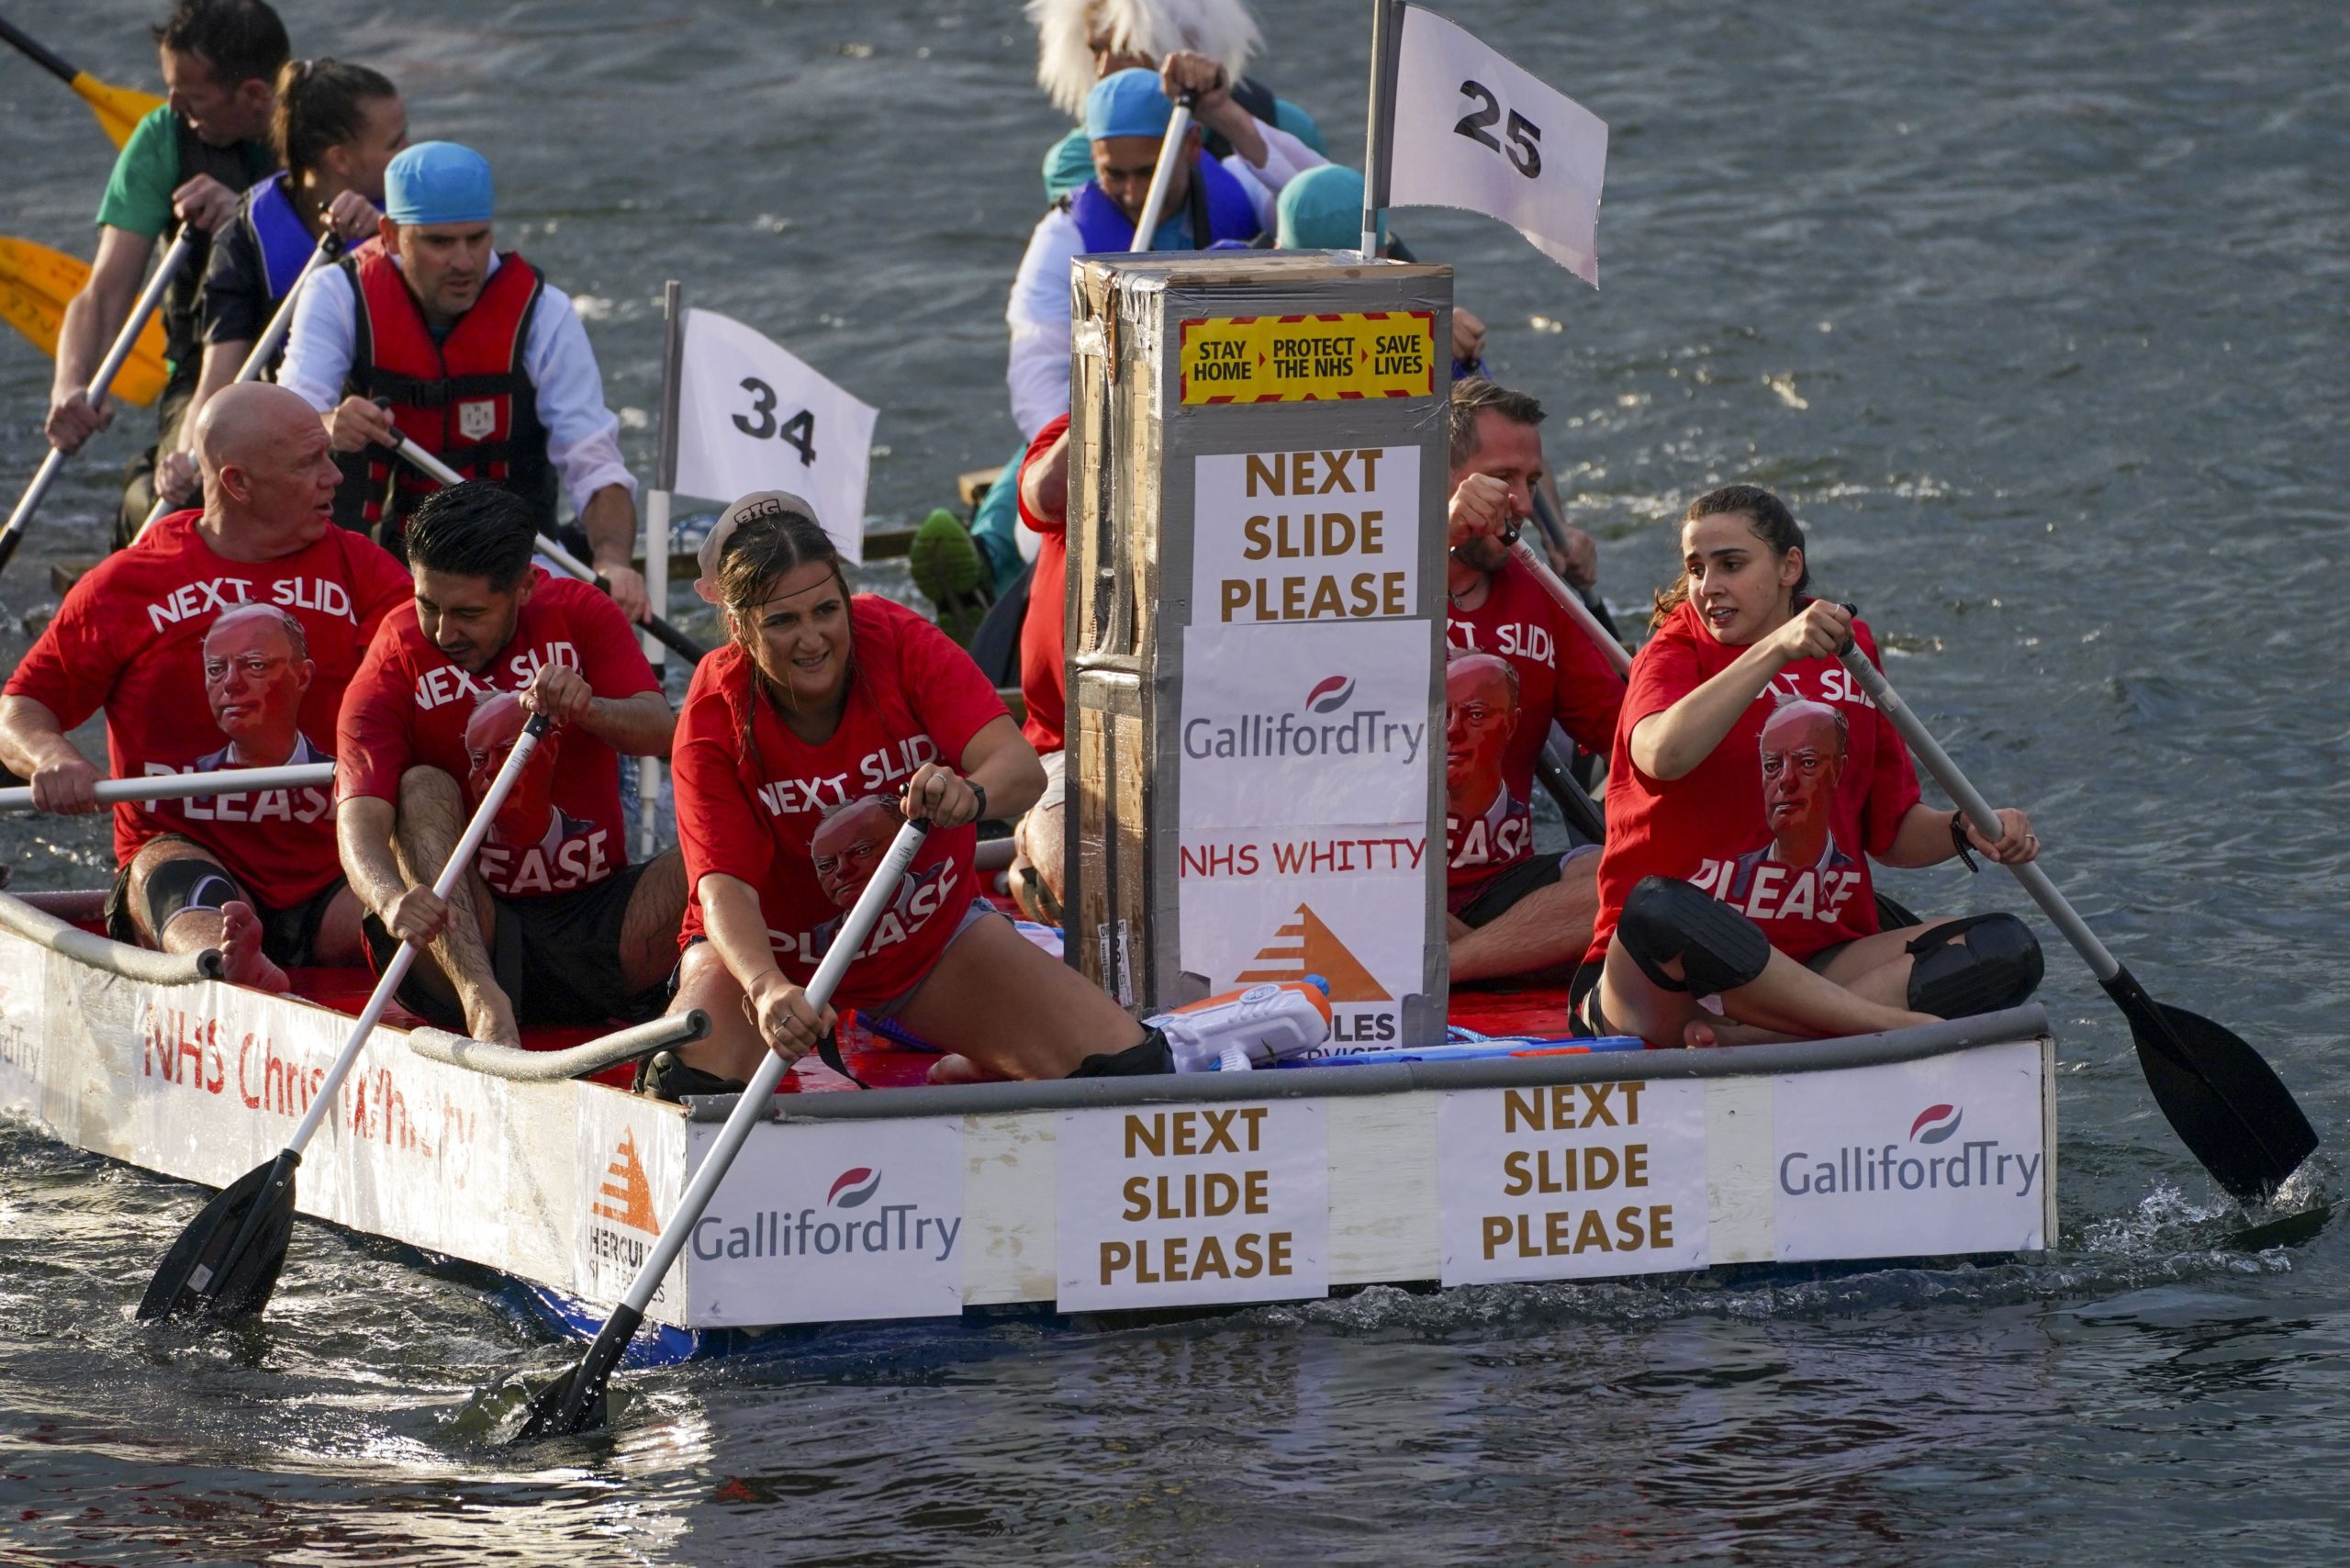 Chris Whitty and key workers honoured in ‘superhero’ charity raft race